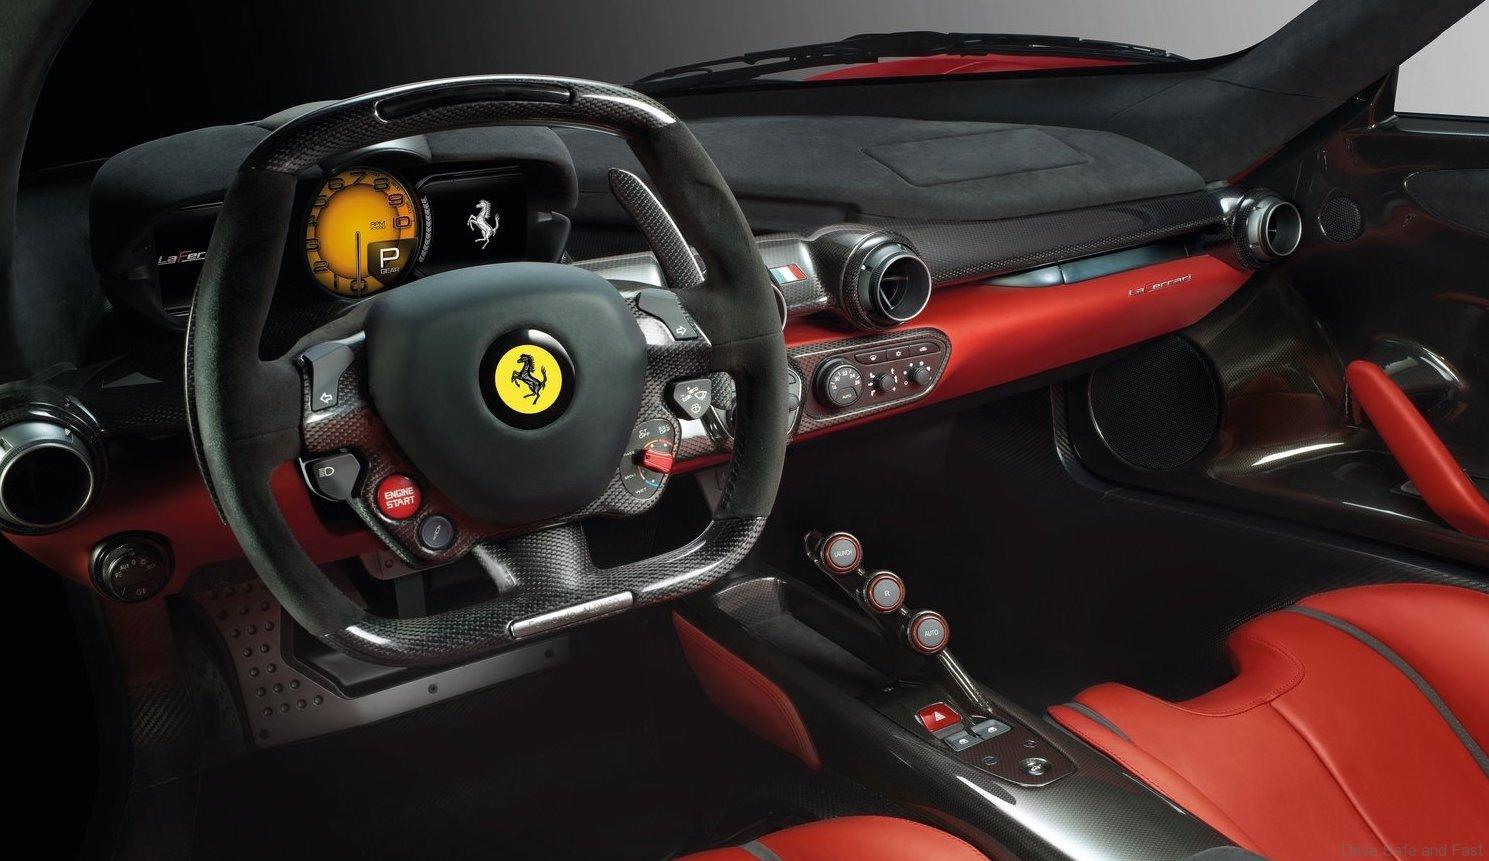 Ferrari LaFerrari Hybrid Battery Replacement Price Shared